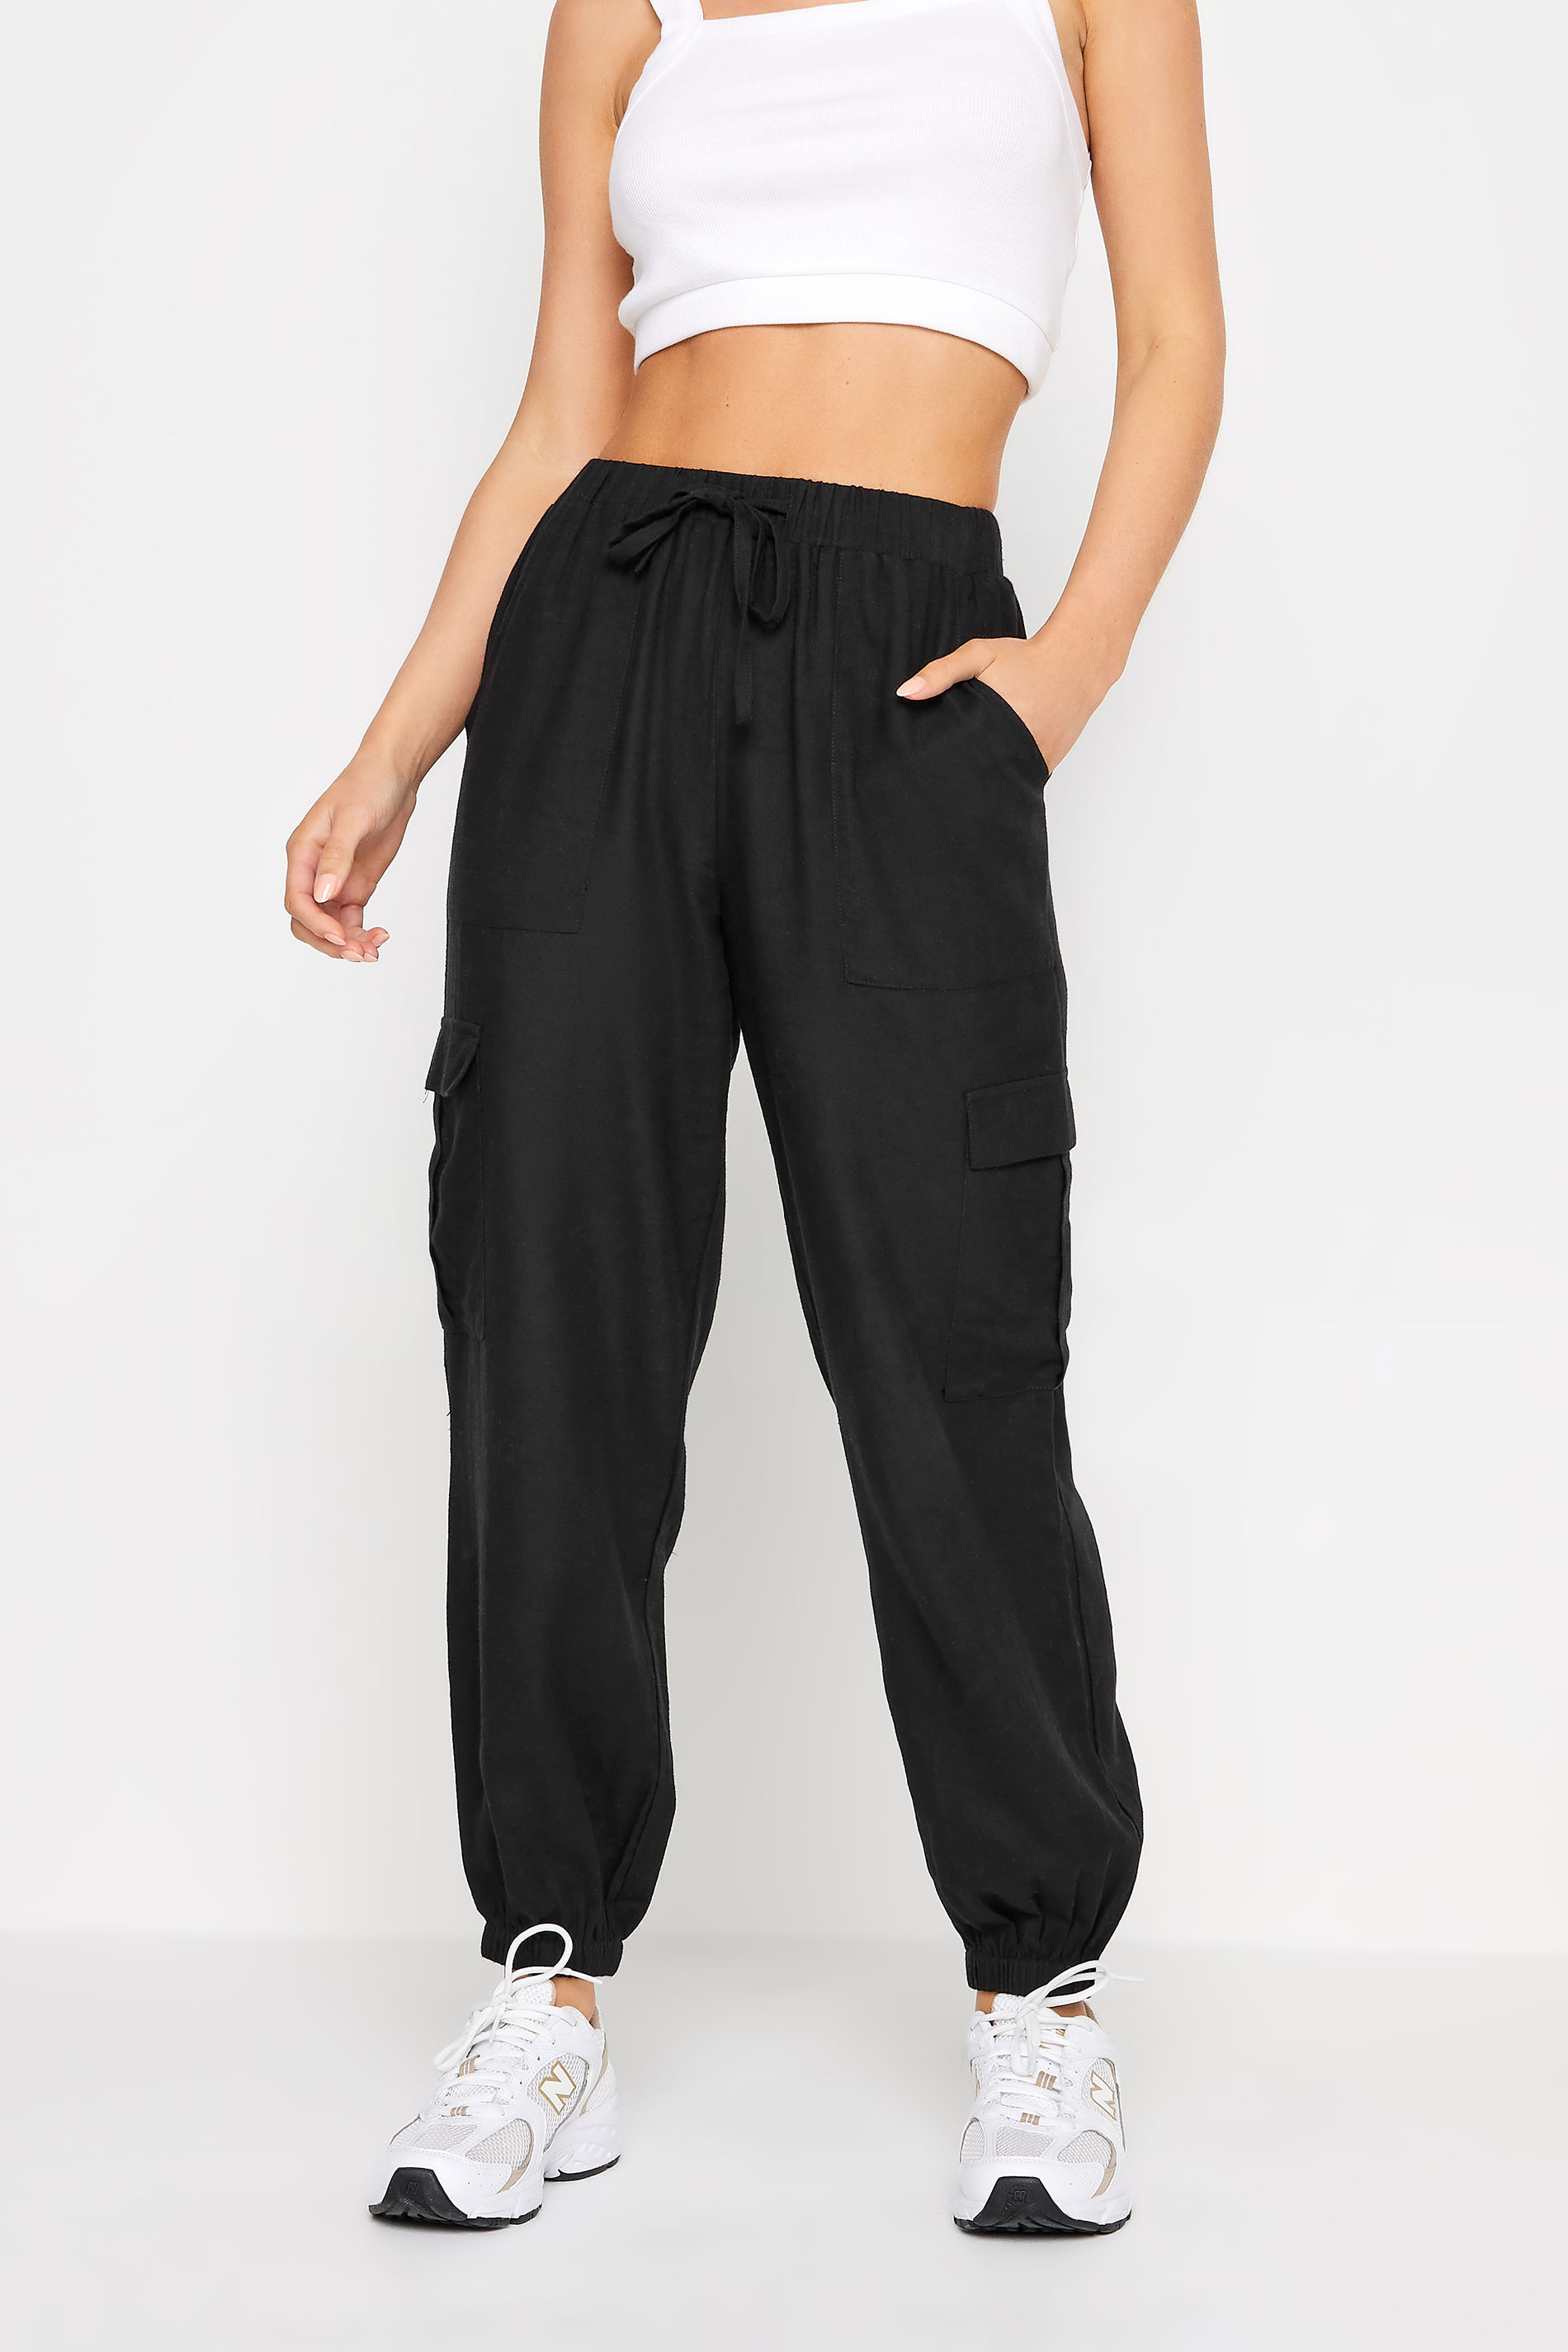 PixieGirl Petite Womens Black Linen Cuffed Cargo Trousers | PixieGirl 2